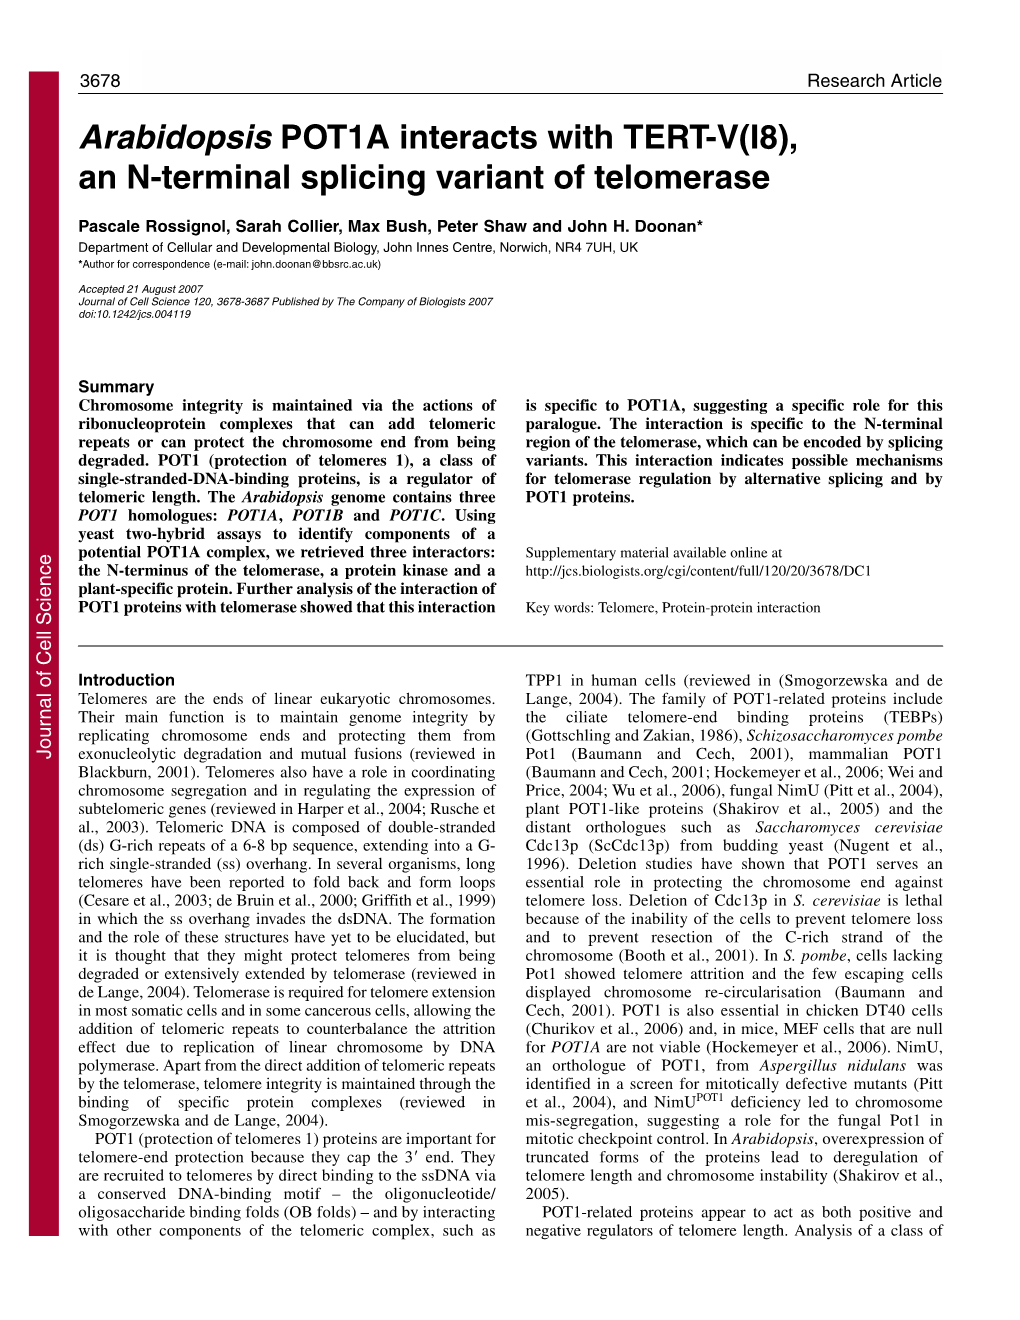 An N-Terminal Splicing Variant of Telomerase